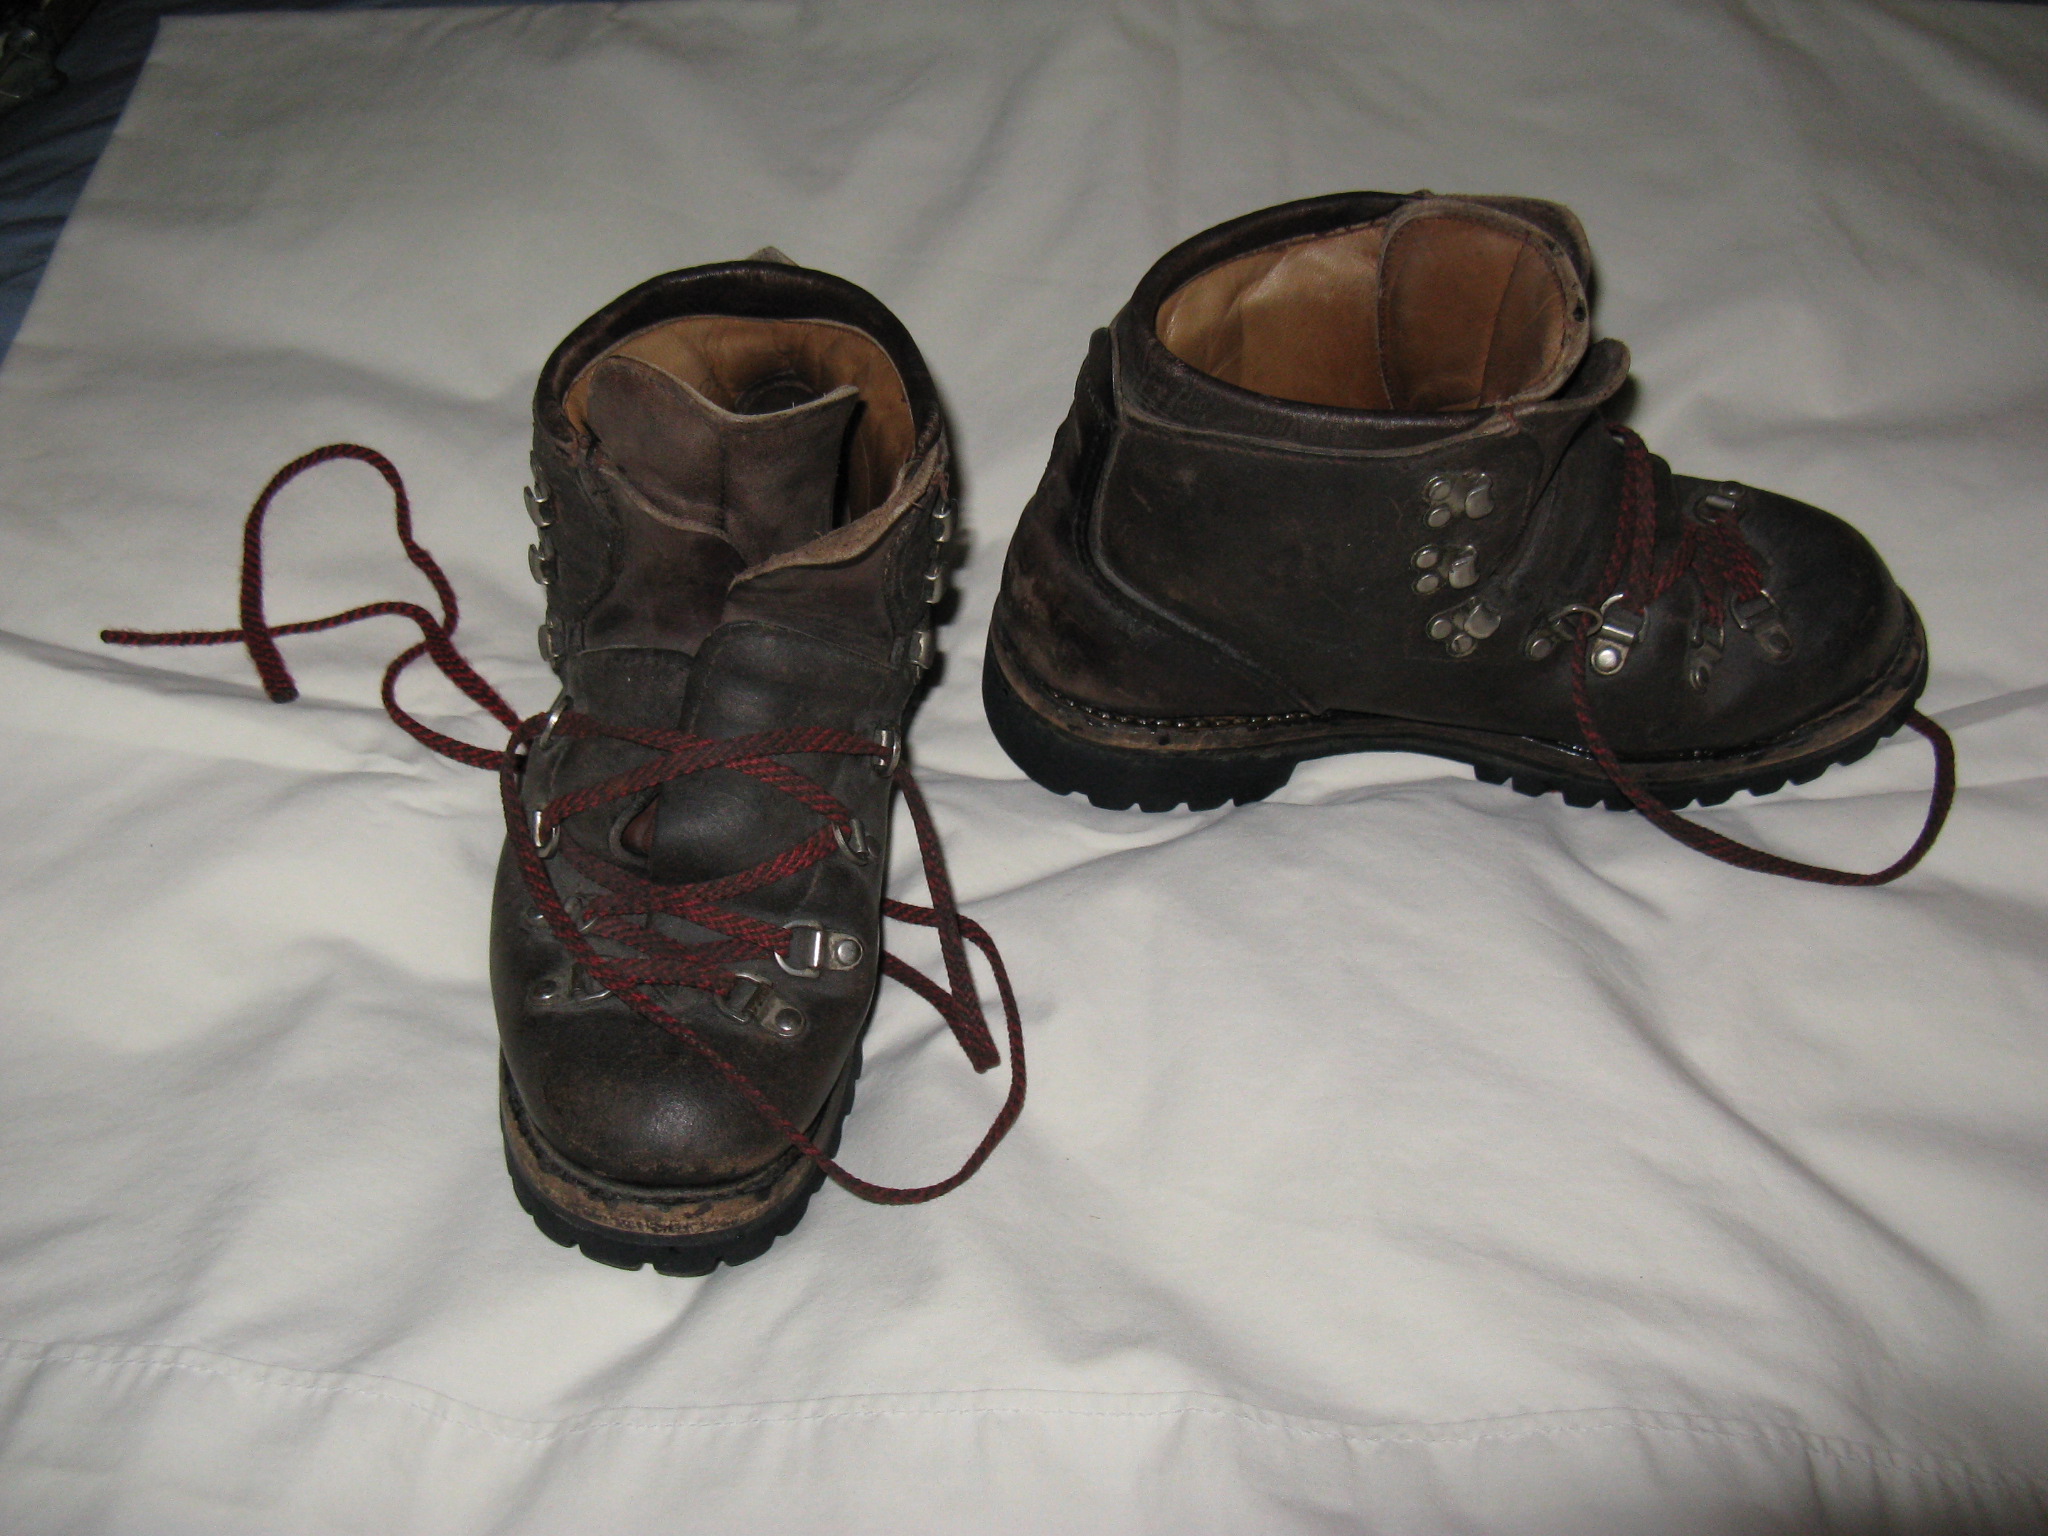 raichle mountaineering boots